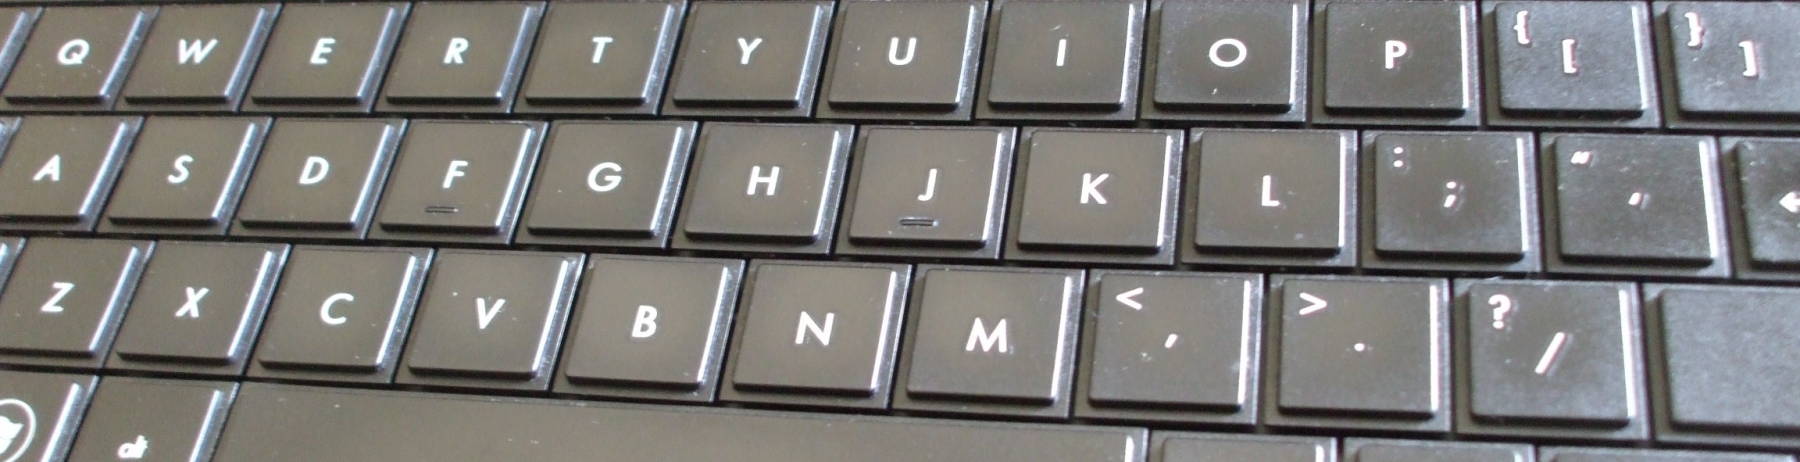 Linux / UNIX keyboard.